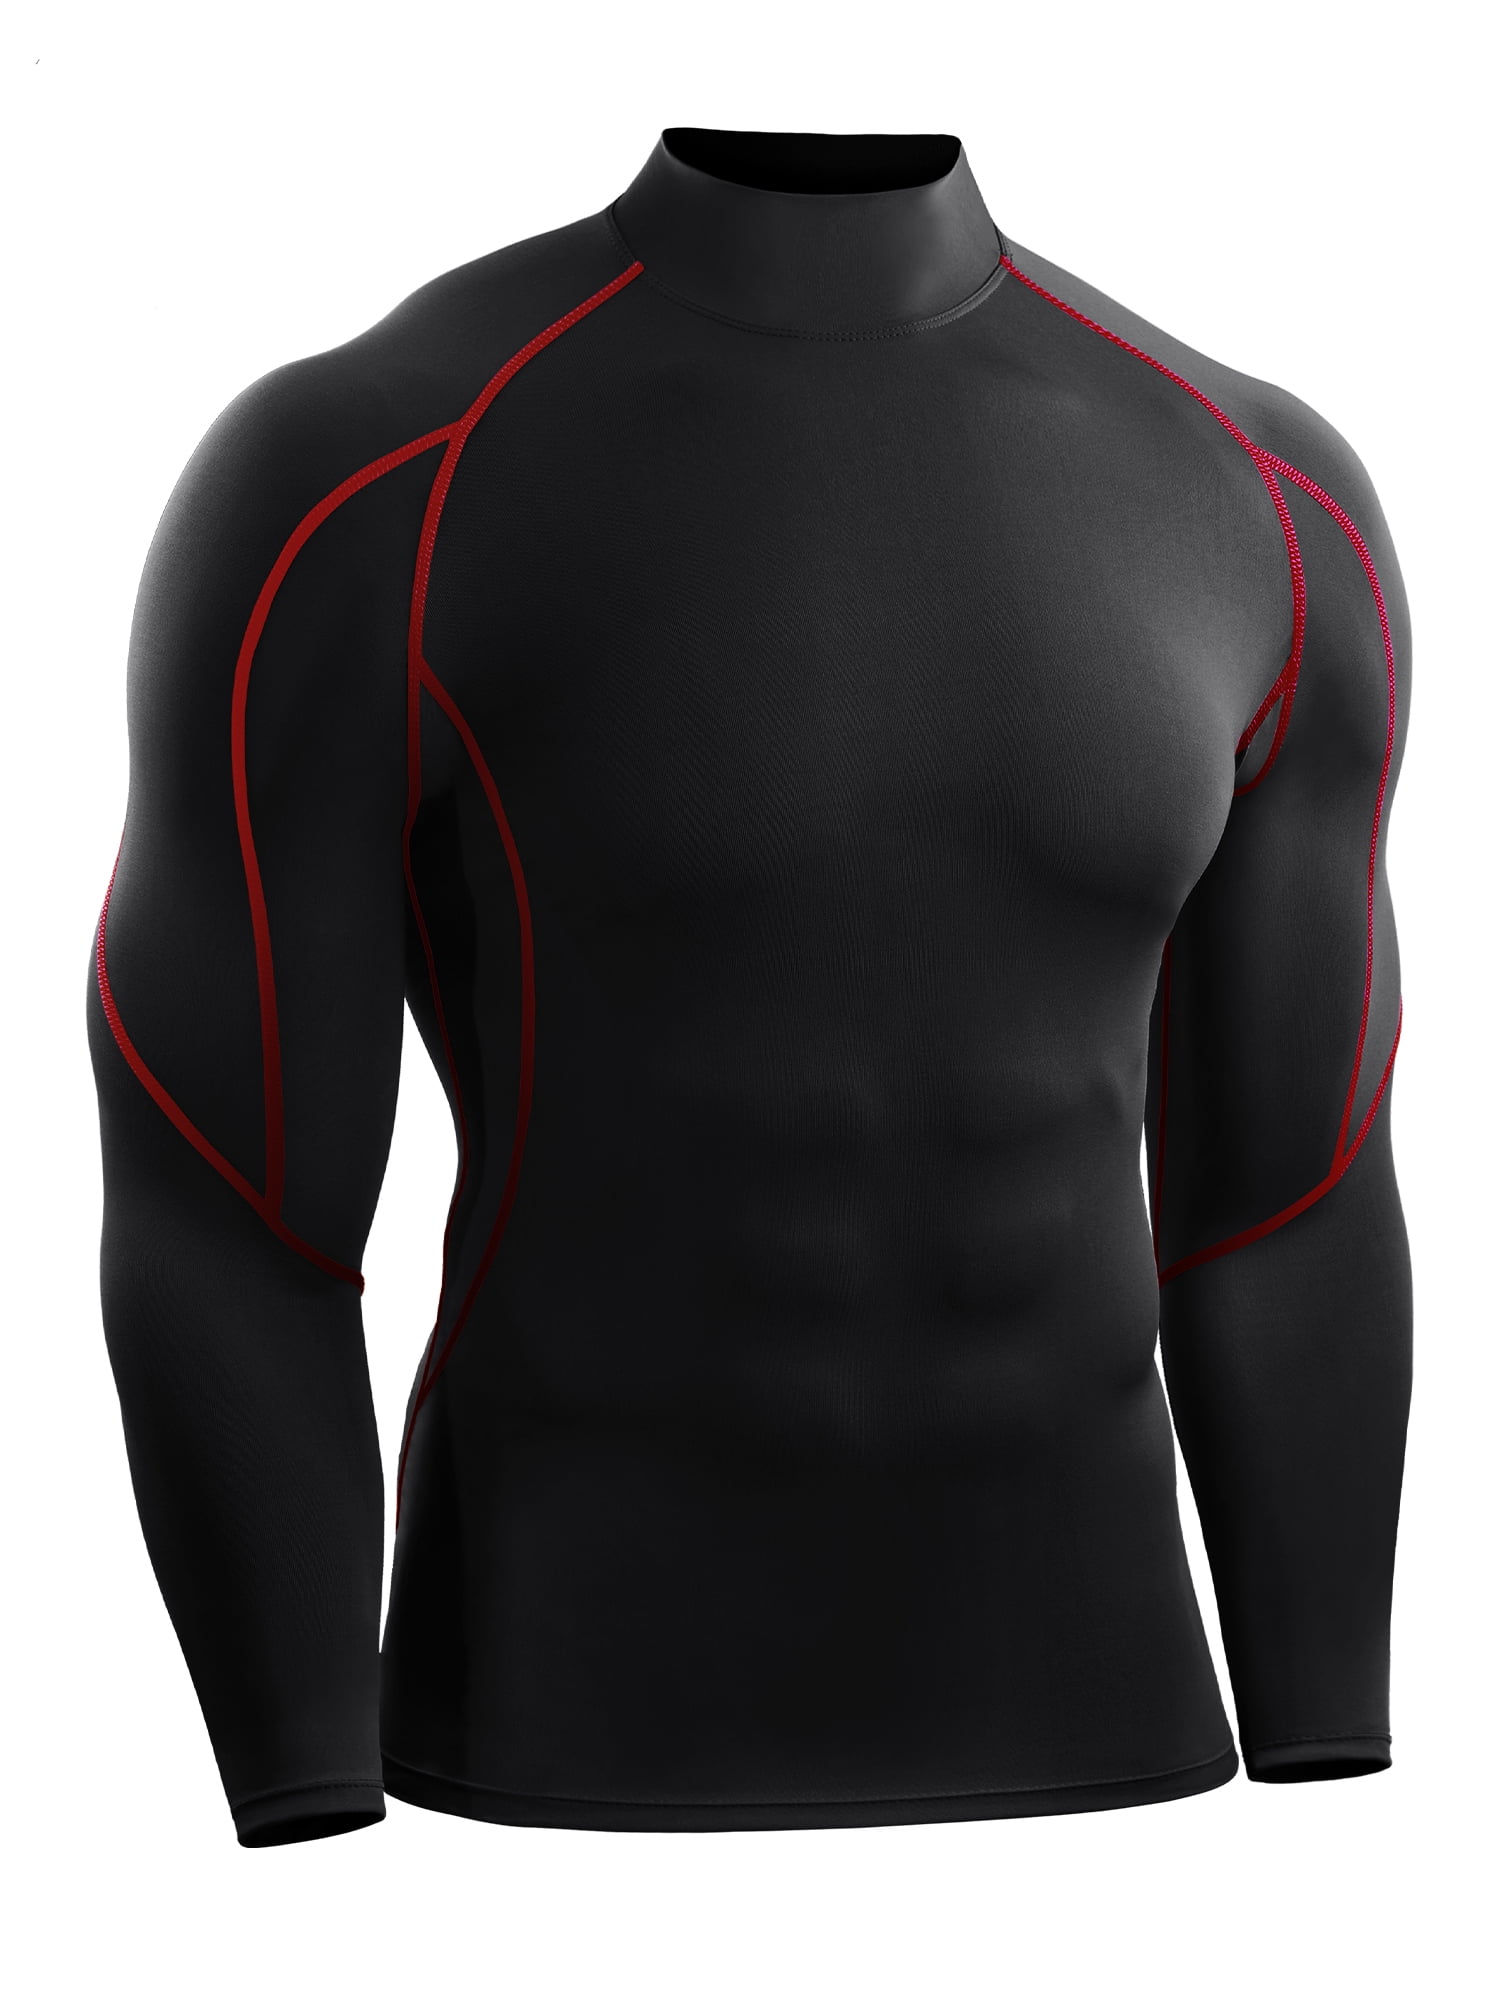 Men's Thermal Base Layers Tops Long Sleeve Shirt Gym Running Workout T Shirts G1 